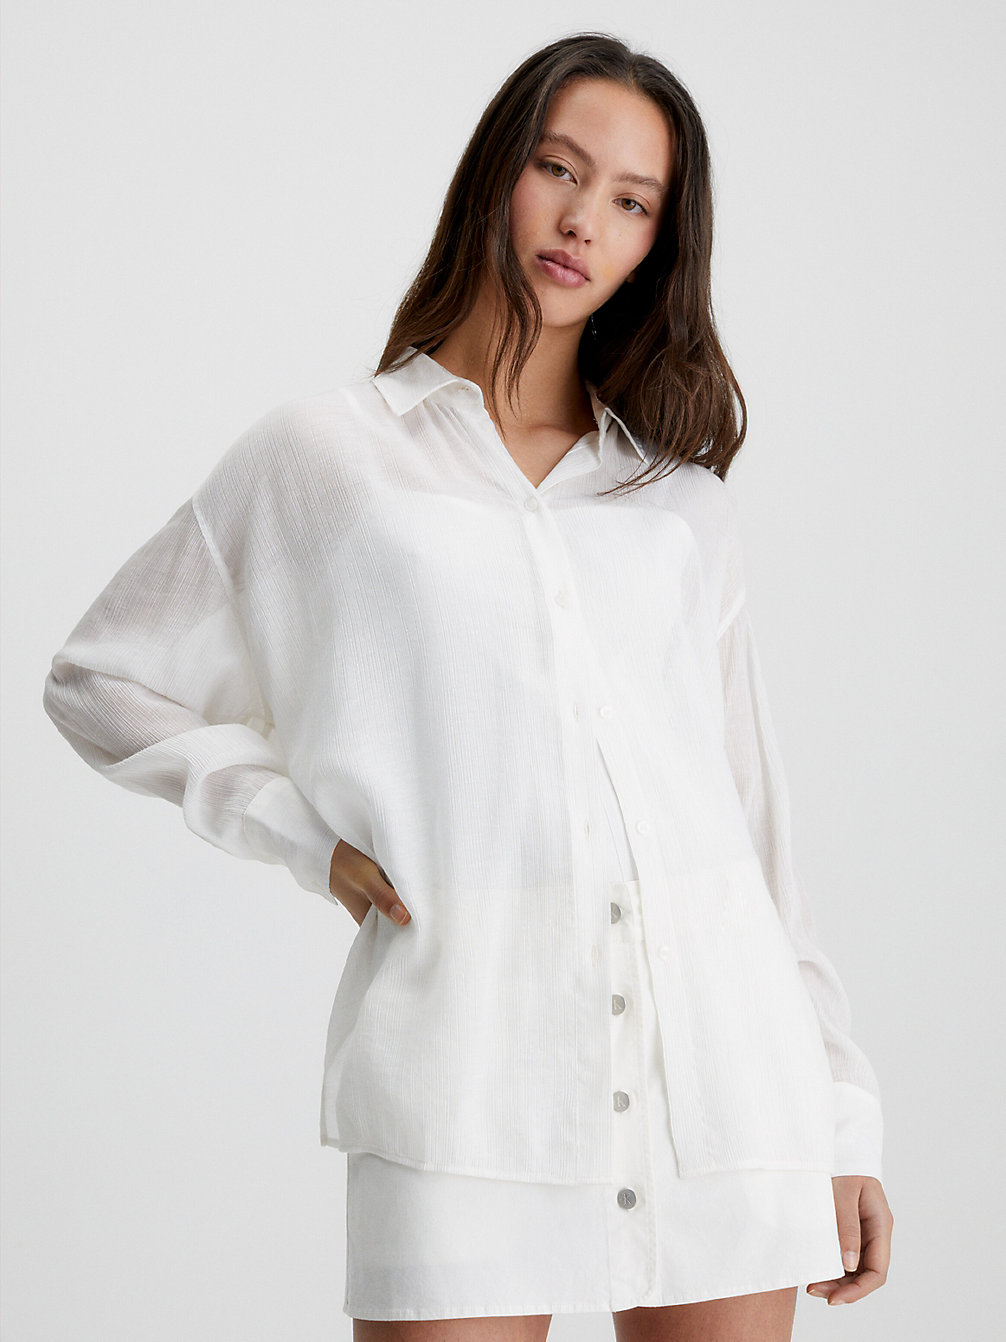 ANCIENT WHITE Crinkle Rayon Split Back Blouse undefined women Calvin Klein